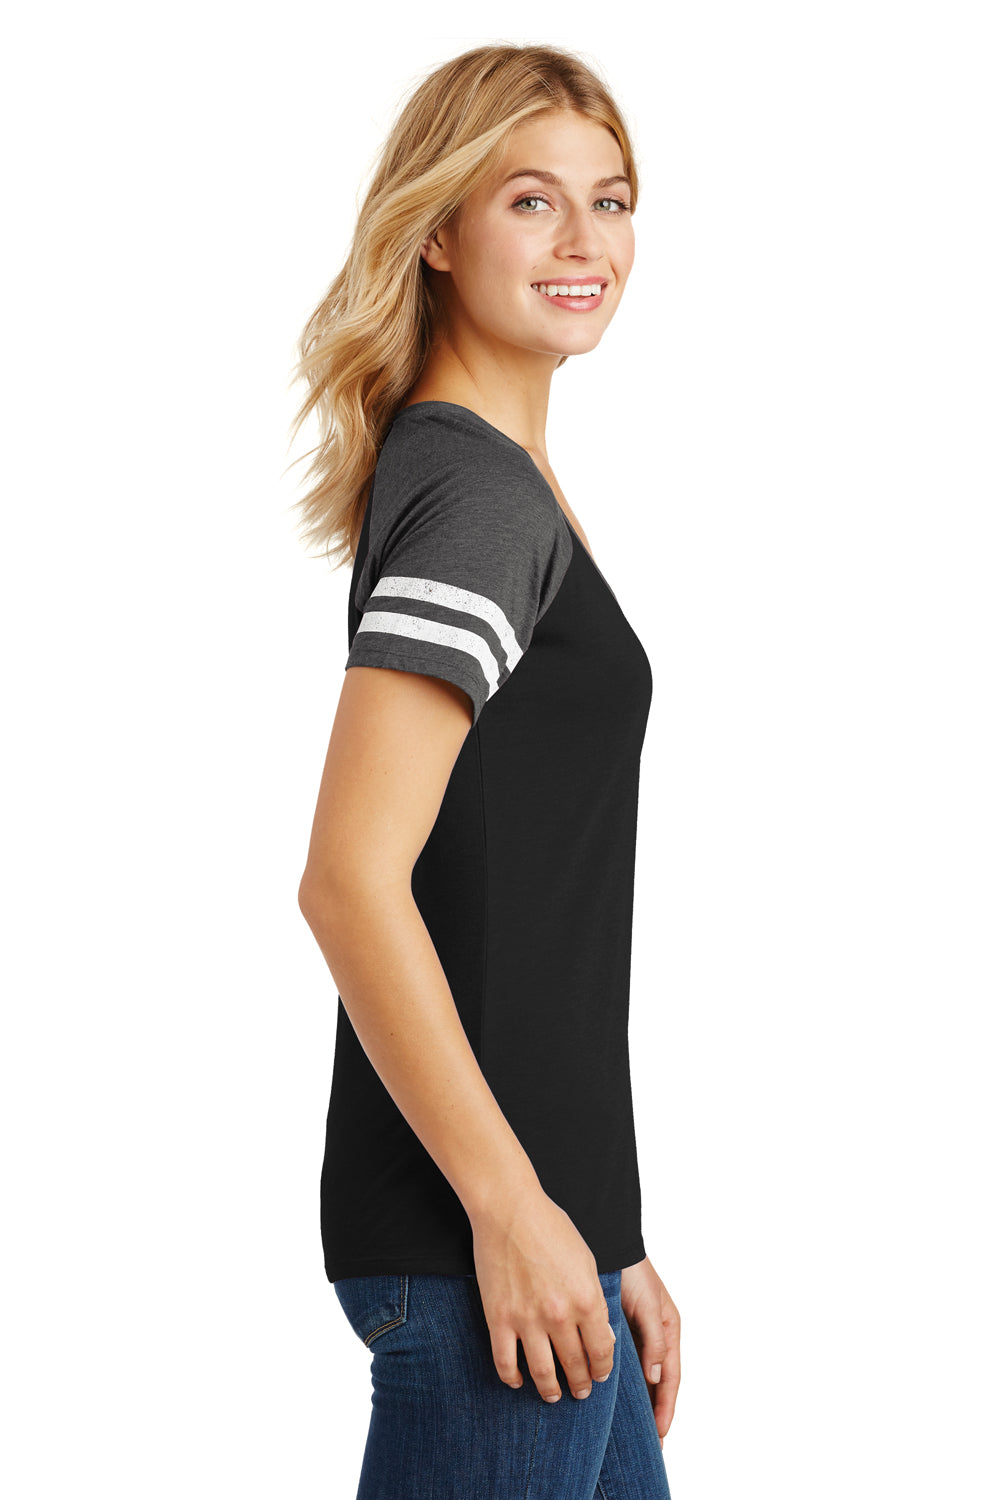 District DM476 Womens Game Short Sleeve V-Neck T-Shirt Black/Charcoal Grey Side